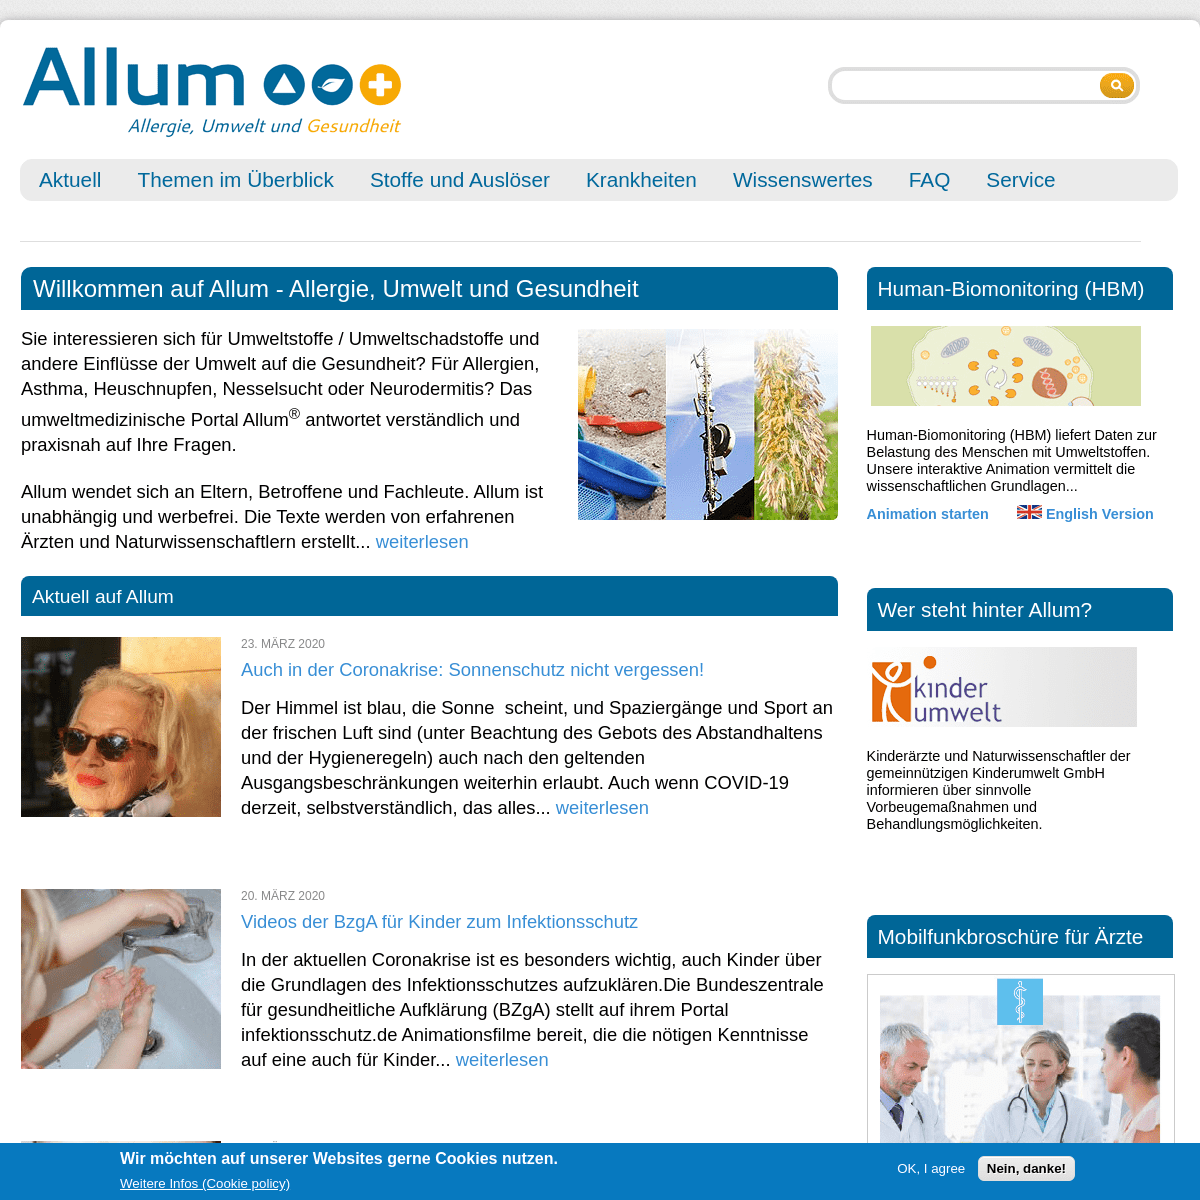 A complete backup of allum.de